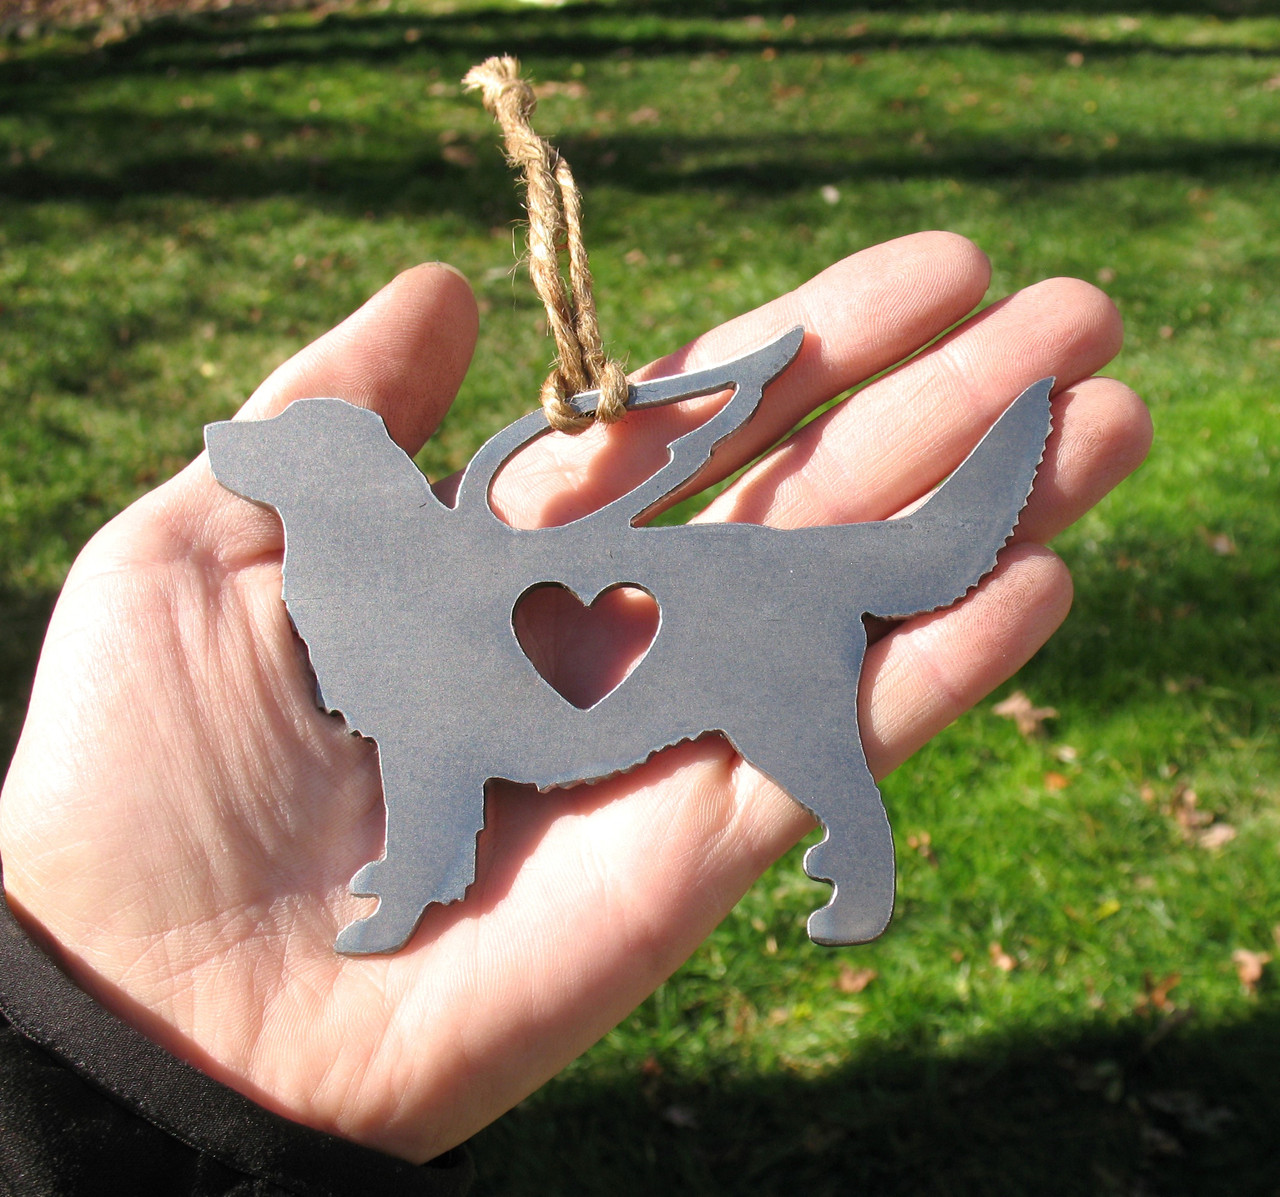 Golden Retriever 4 Pet Loss Gift Ornament Angel - Pet Memorial - Dog Sympathy Remembrance Gift - Metal Dog Christmas Ornament